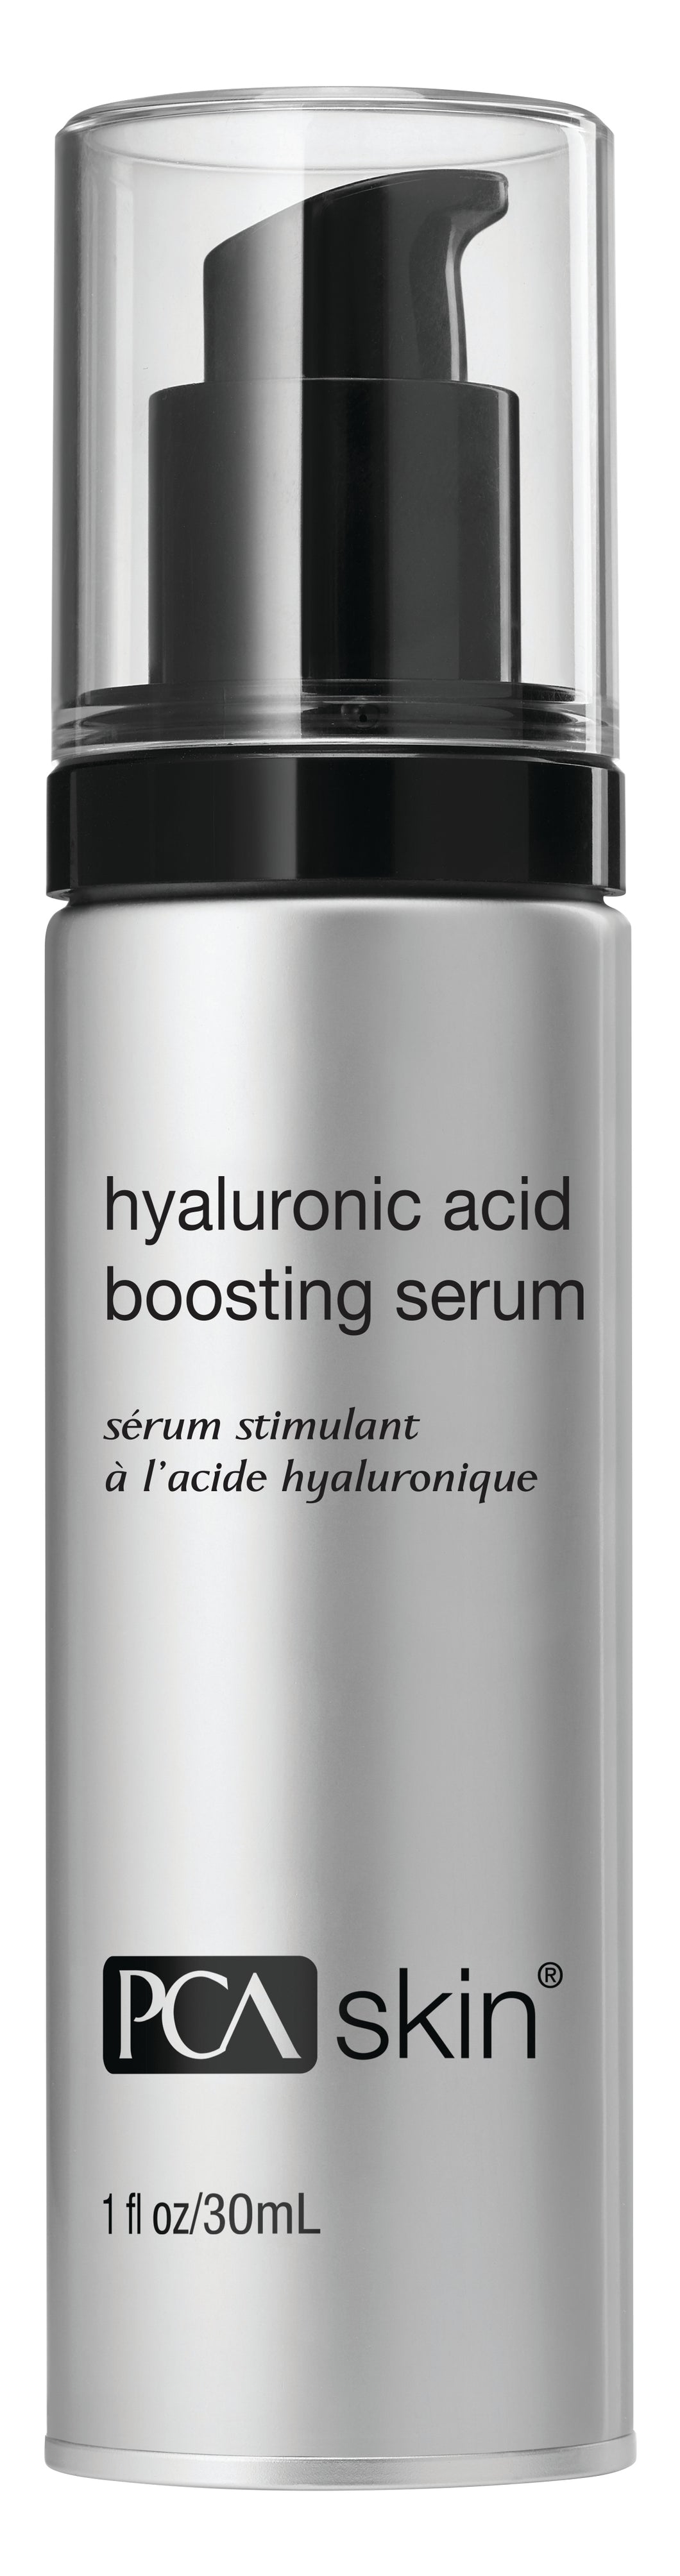 PCA Skin Hyaluronic Acid Boosting Serum 3oz